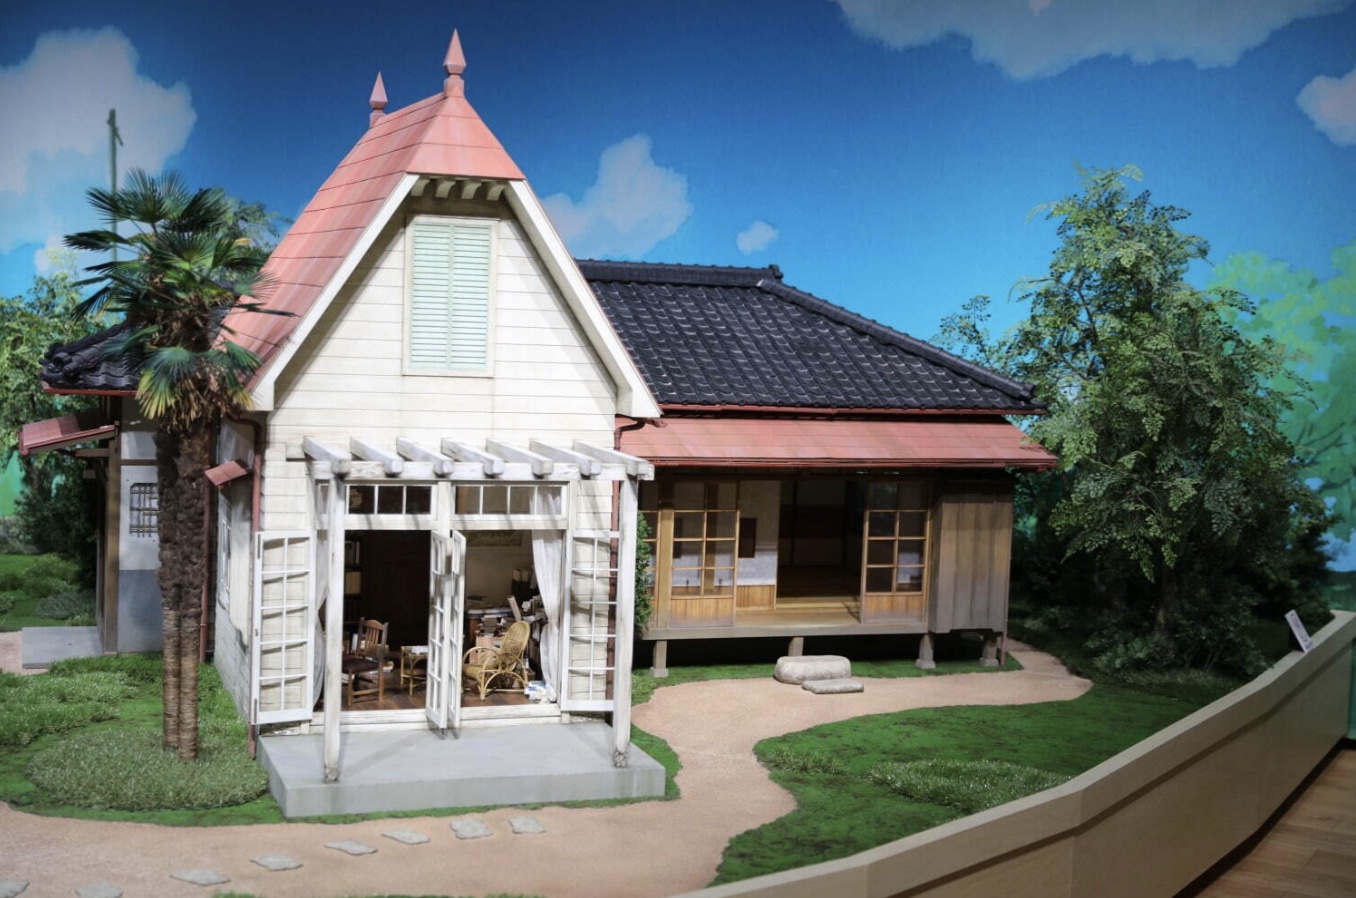 Ghibli Park and Ghibli Exhibition